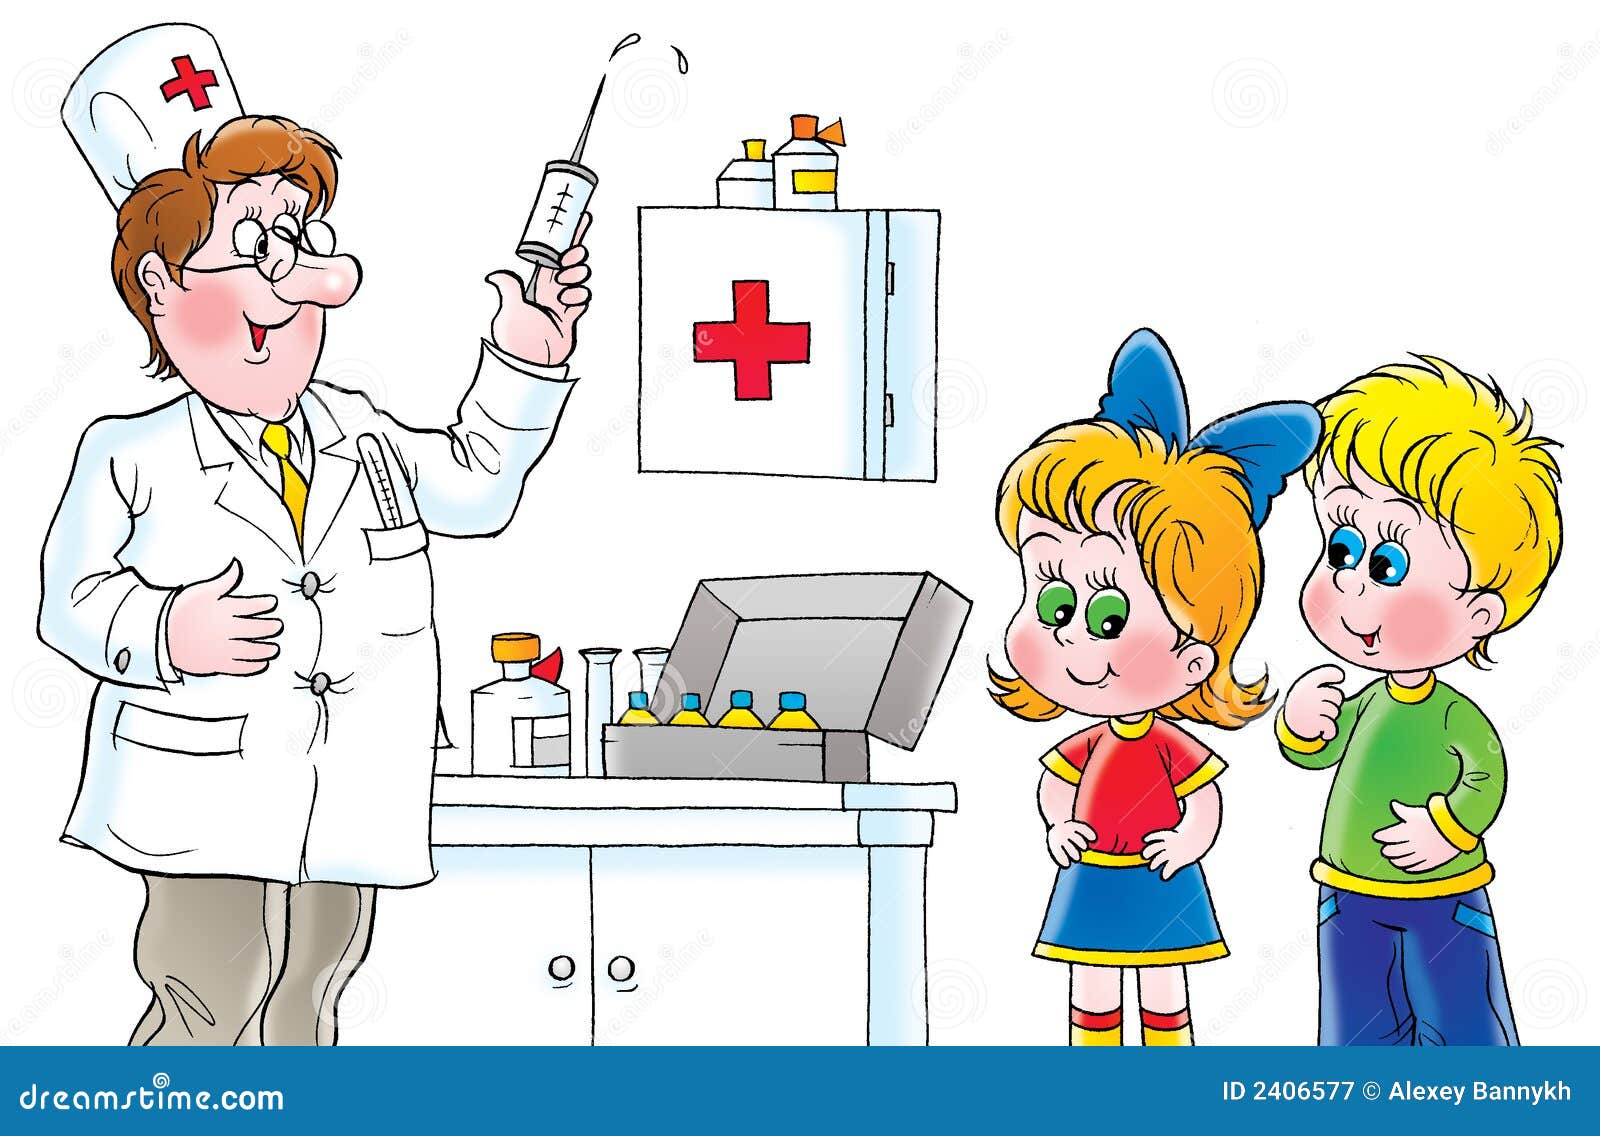 Медицинские картинки детям